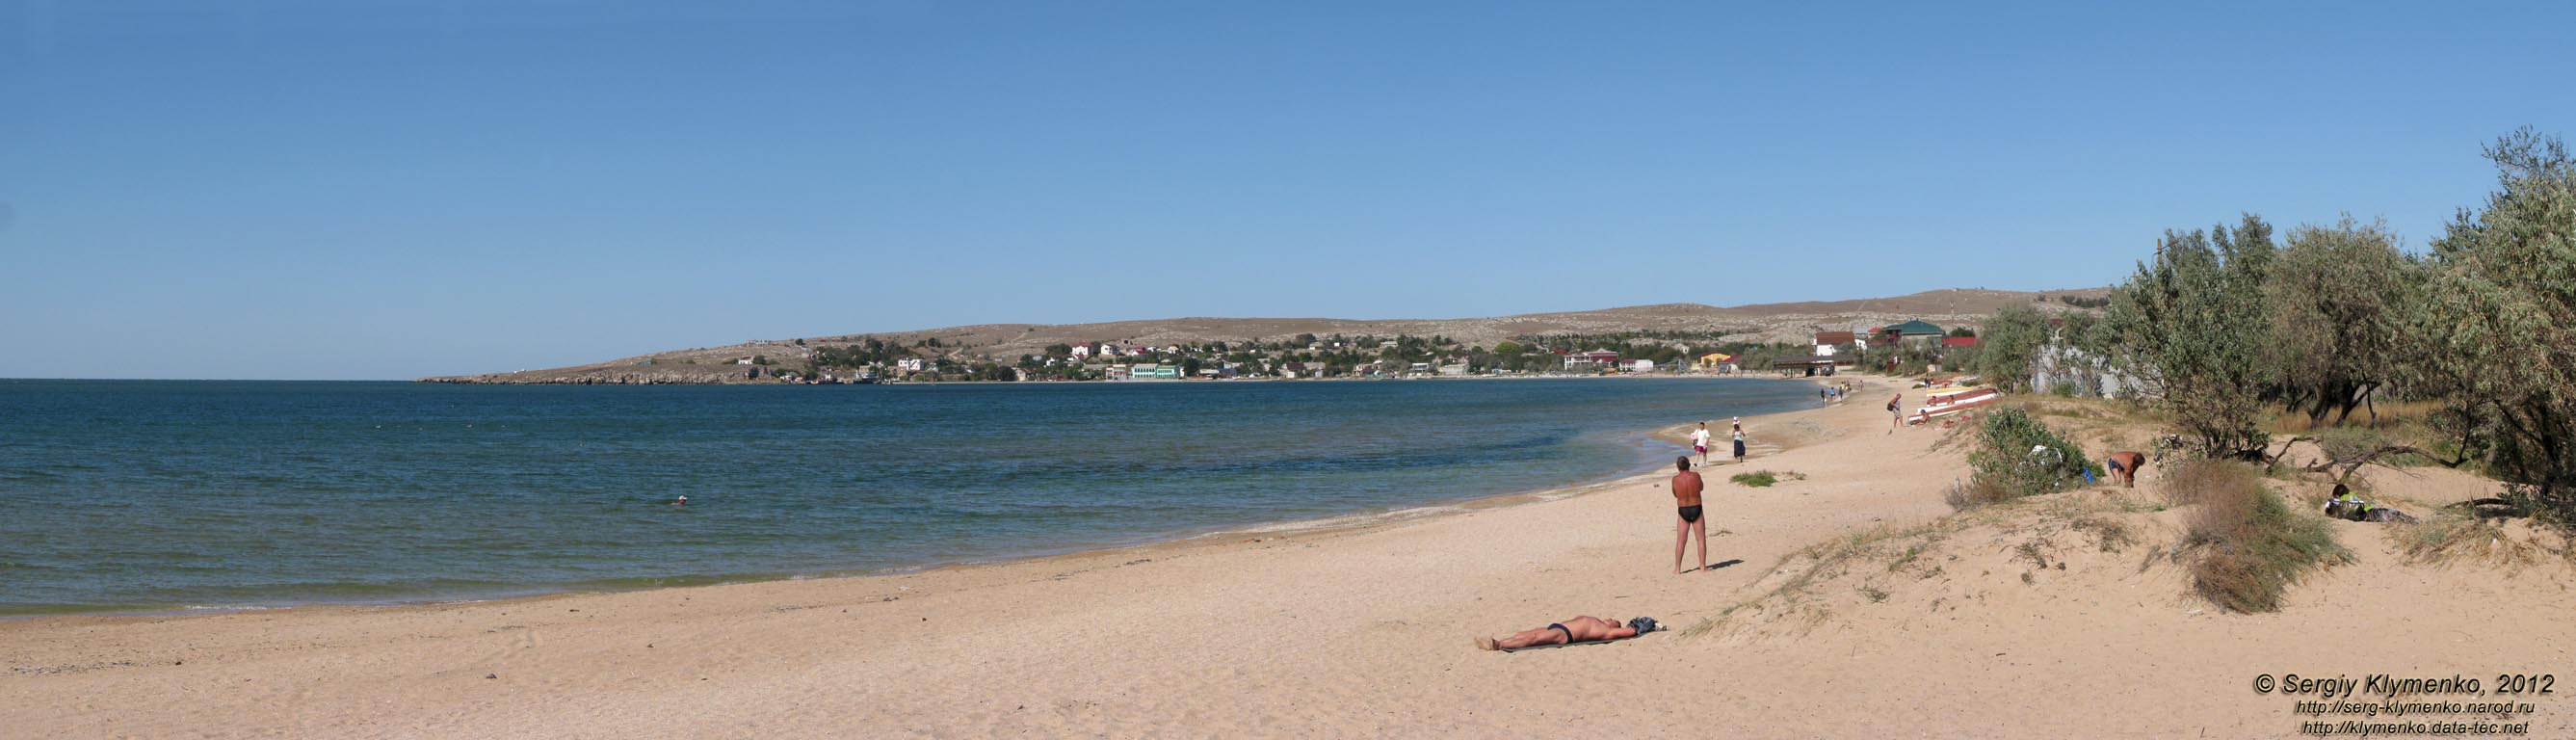 Крым. Фото. Азовское море. Вид на мыс Китень и пляж возле села Семёновка. Панорама ~120°.